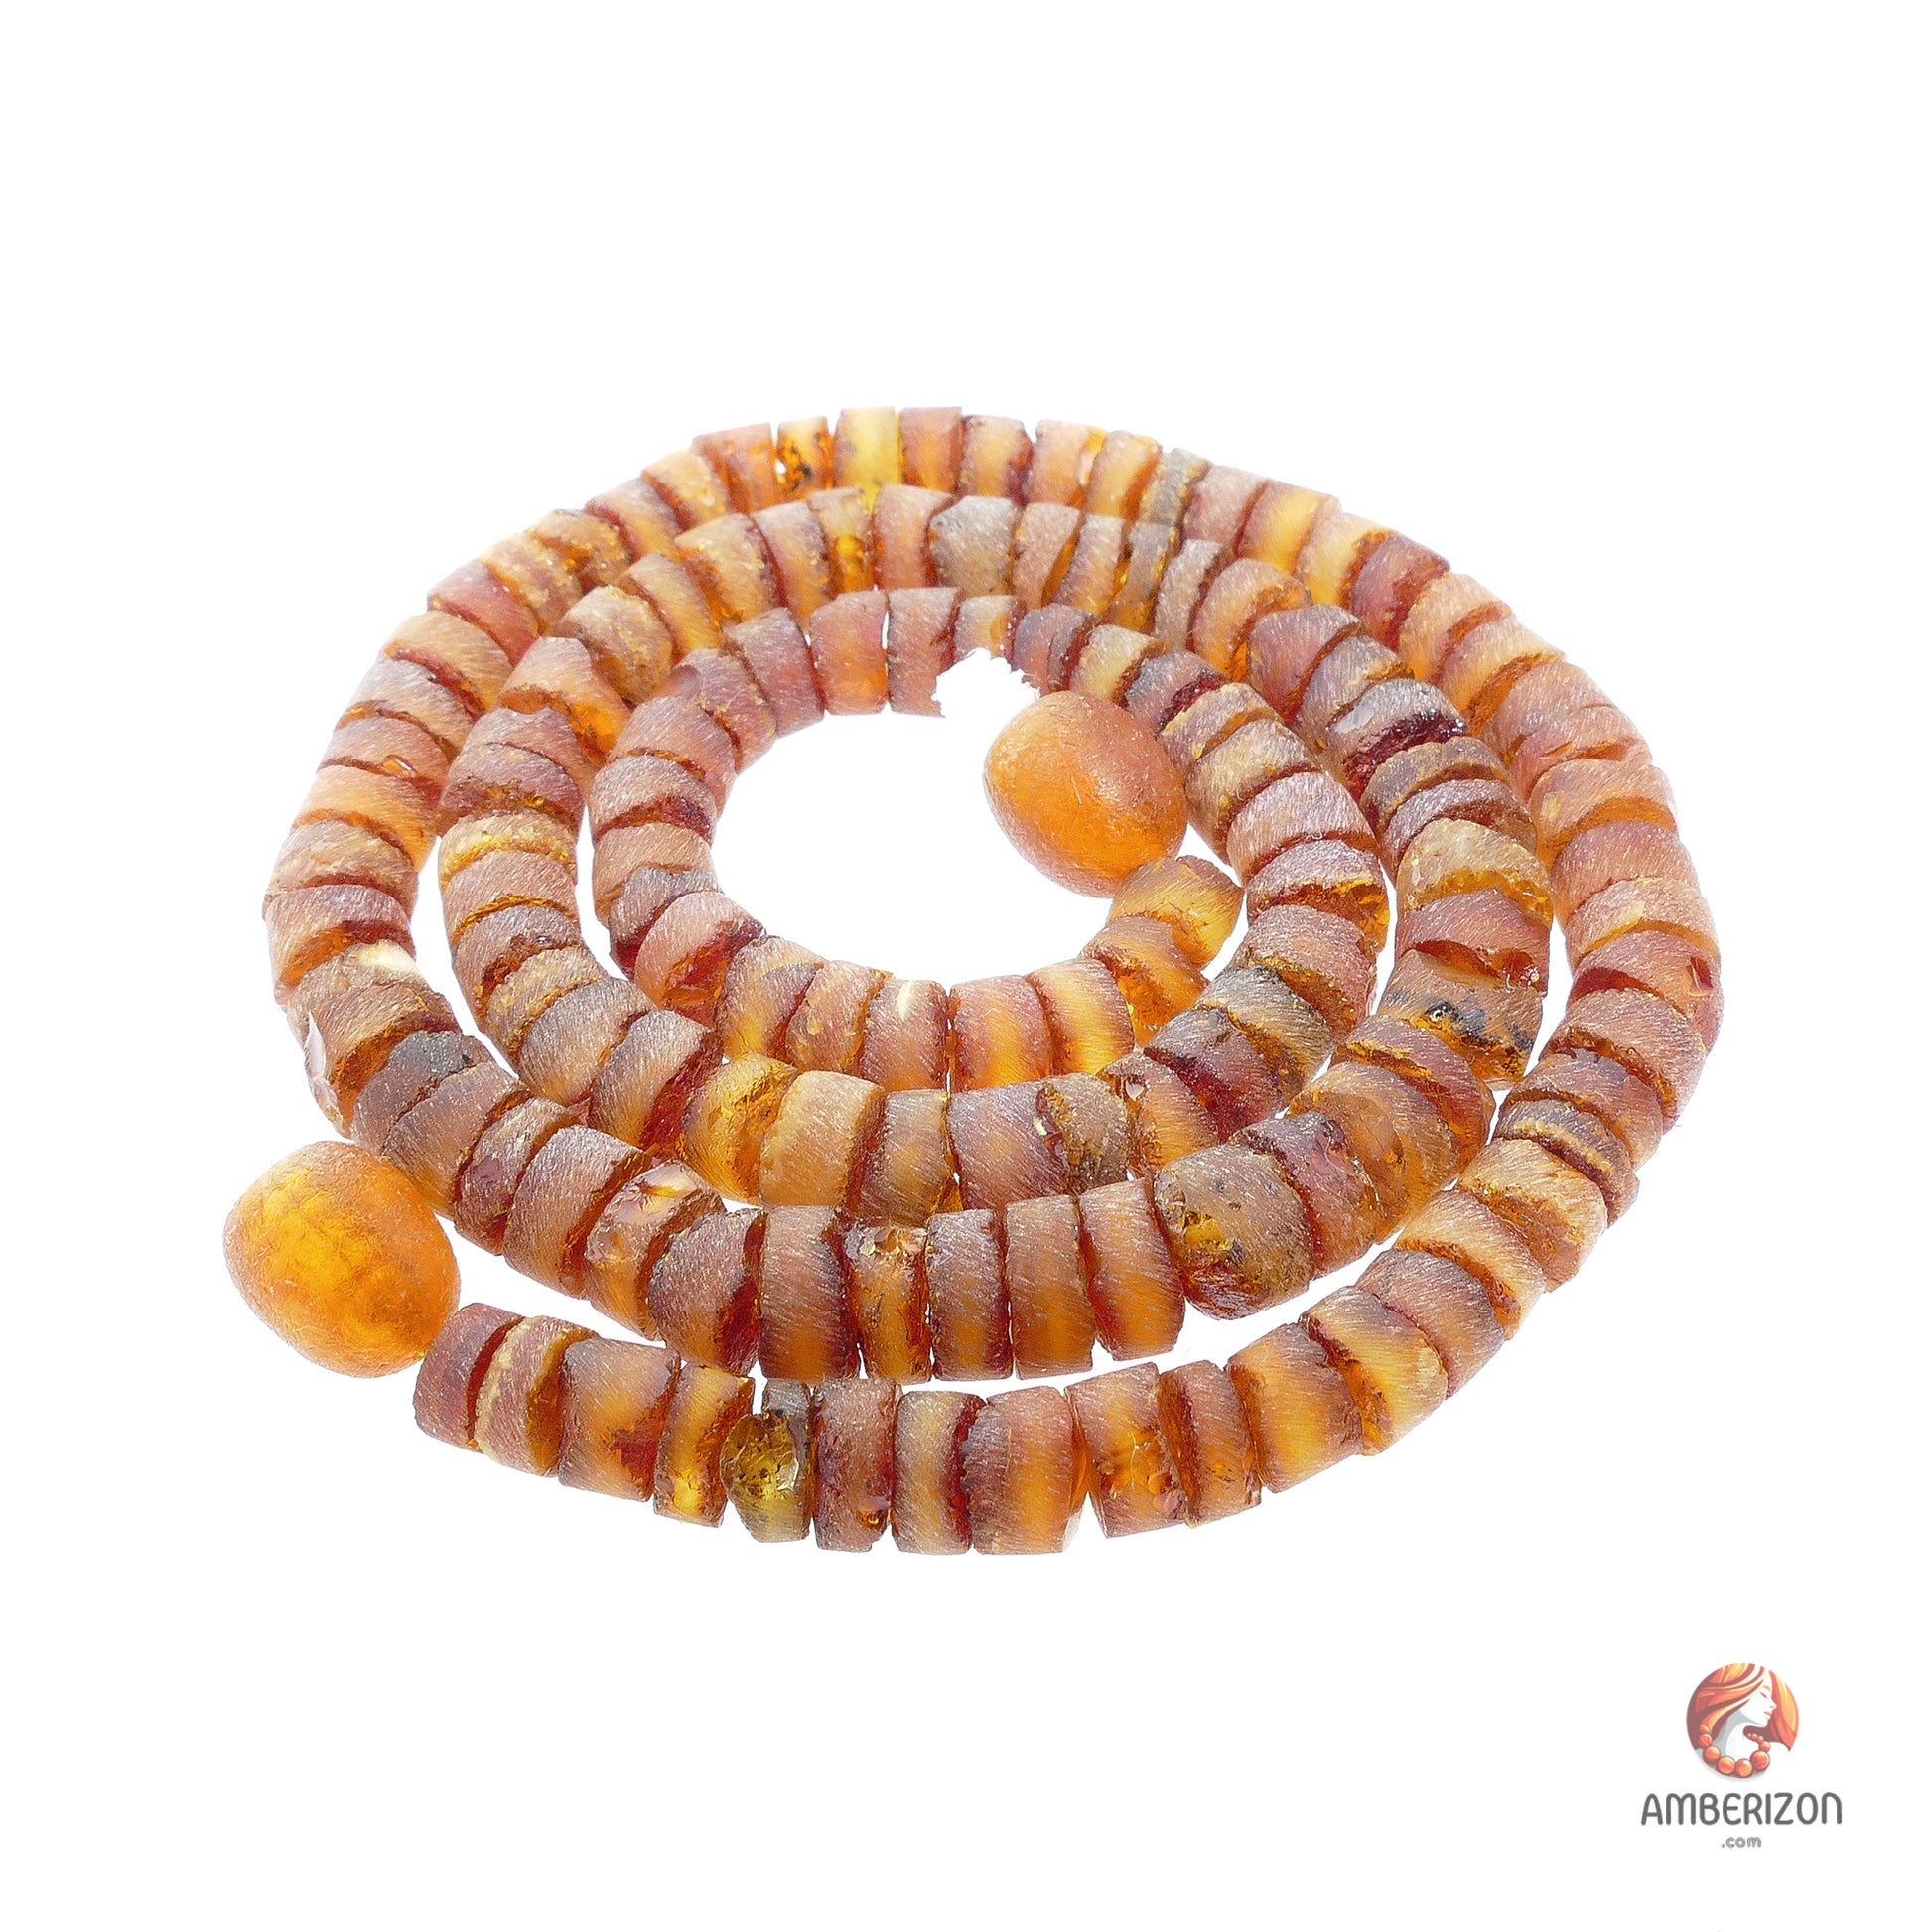 Unisex Baltic amber jewelry - Healing raw amber necklace